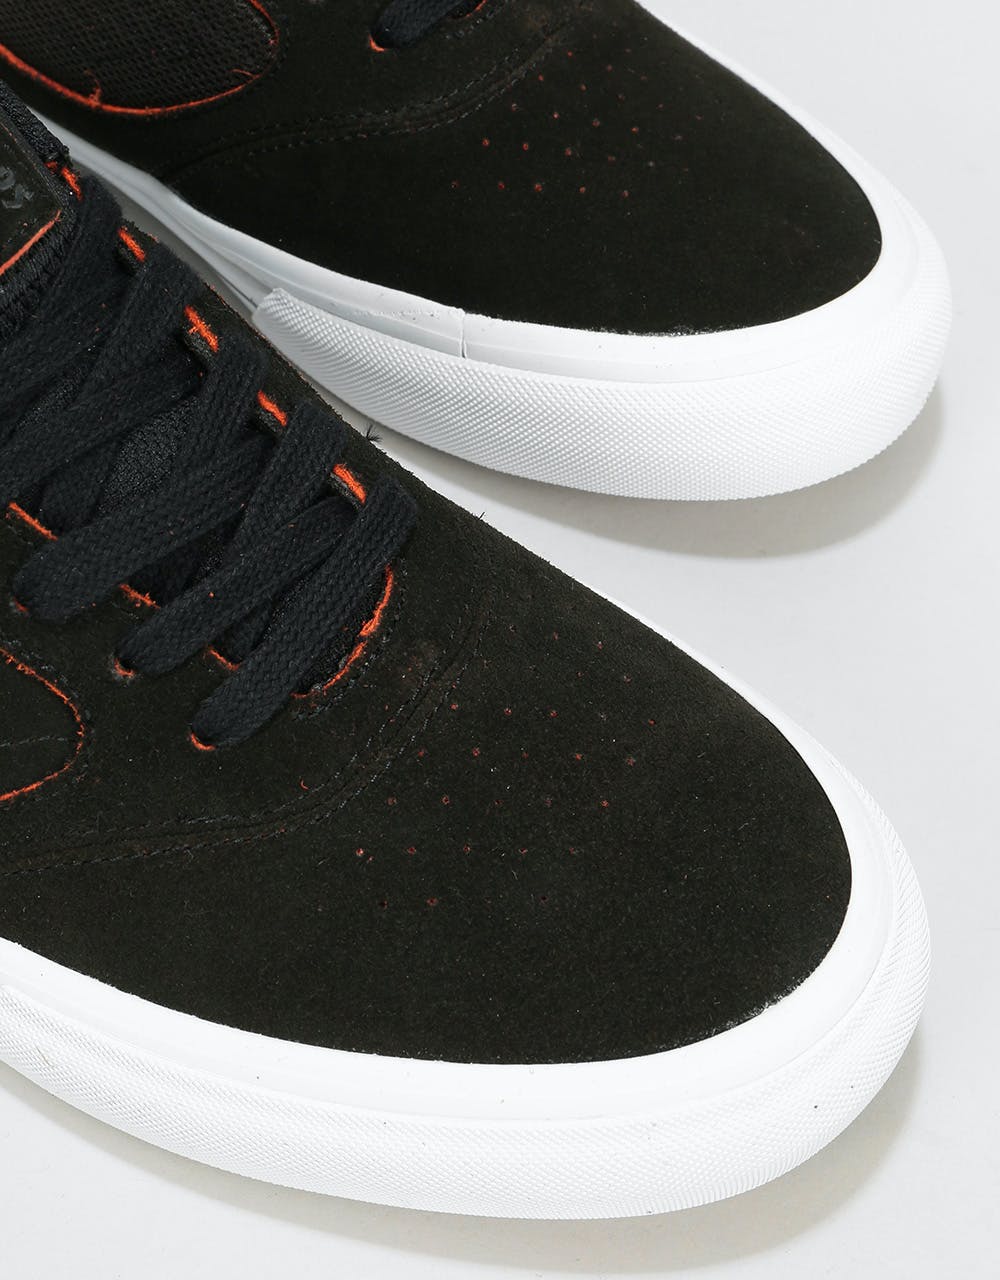 Emerica Reynolds 3 G6 Vulc Skate Shoes - Grey/Orange